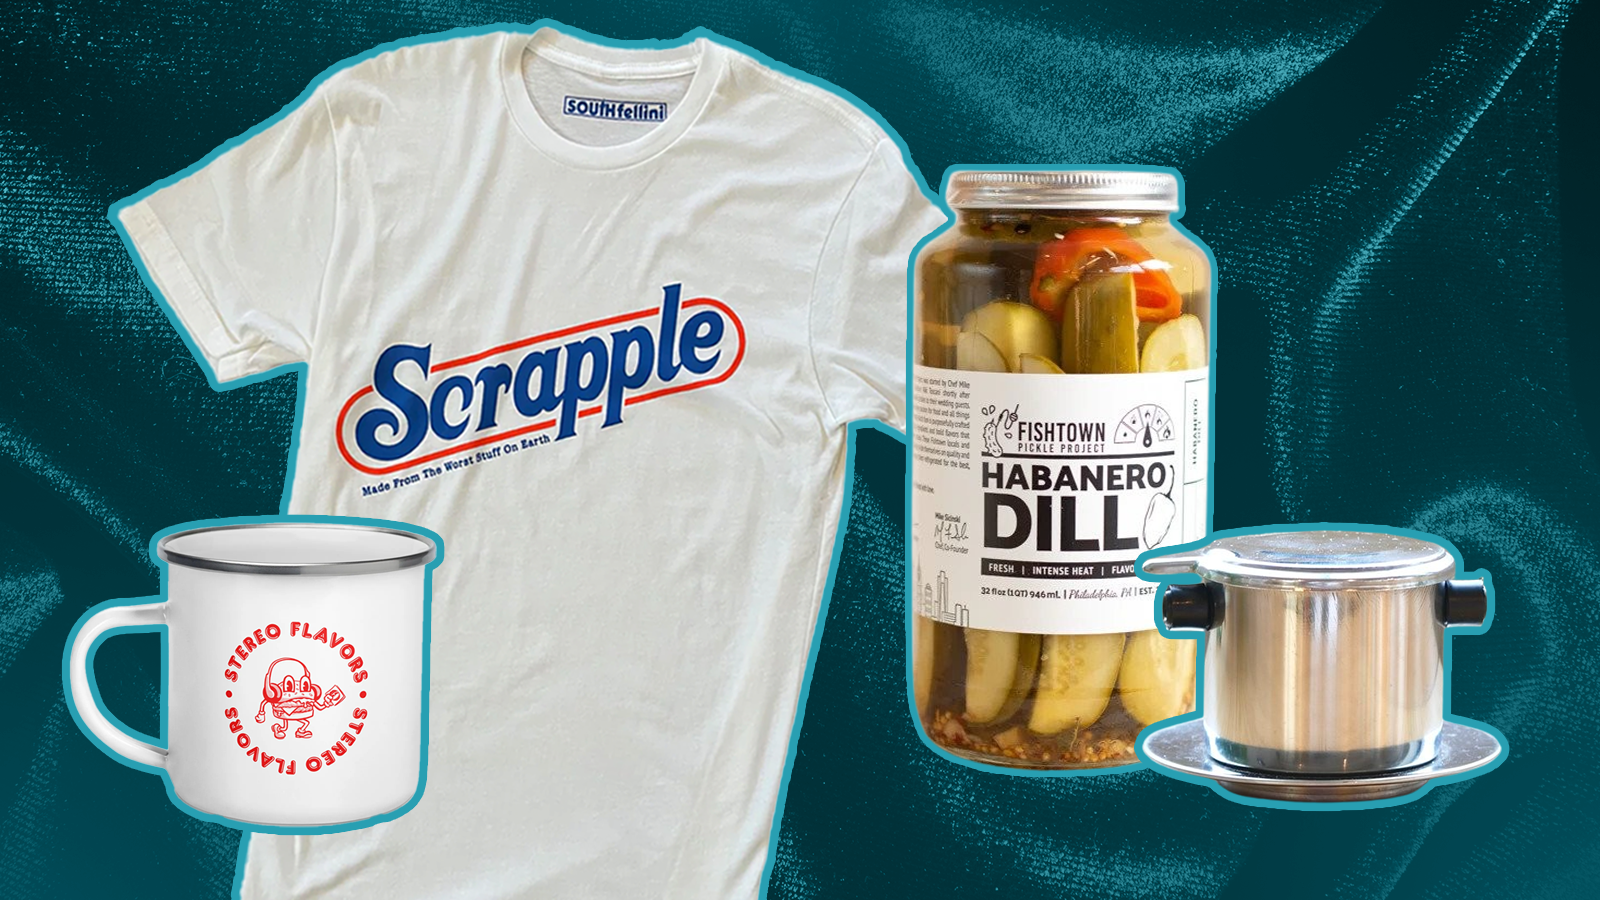 A t-shirt, coffee mug, jar of pickles, and presser